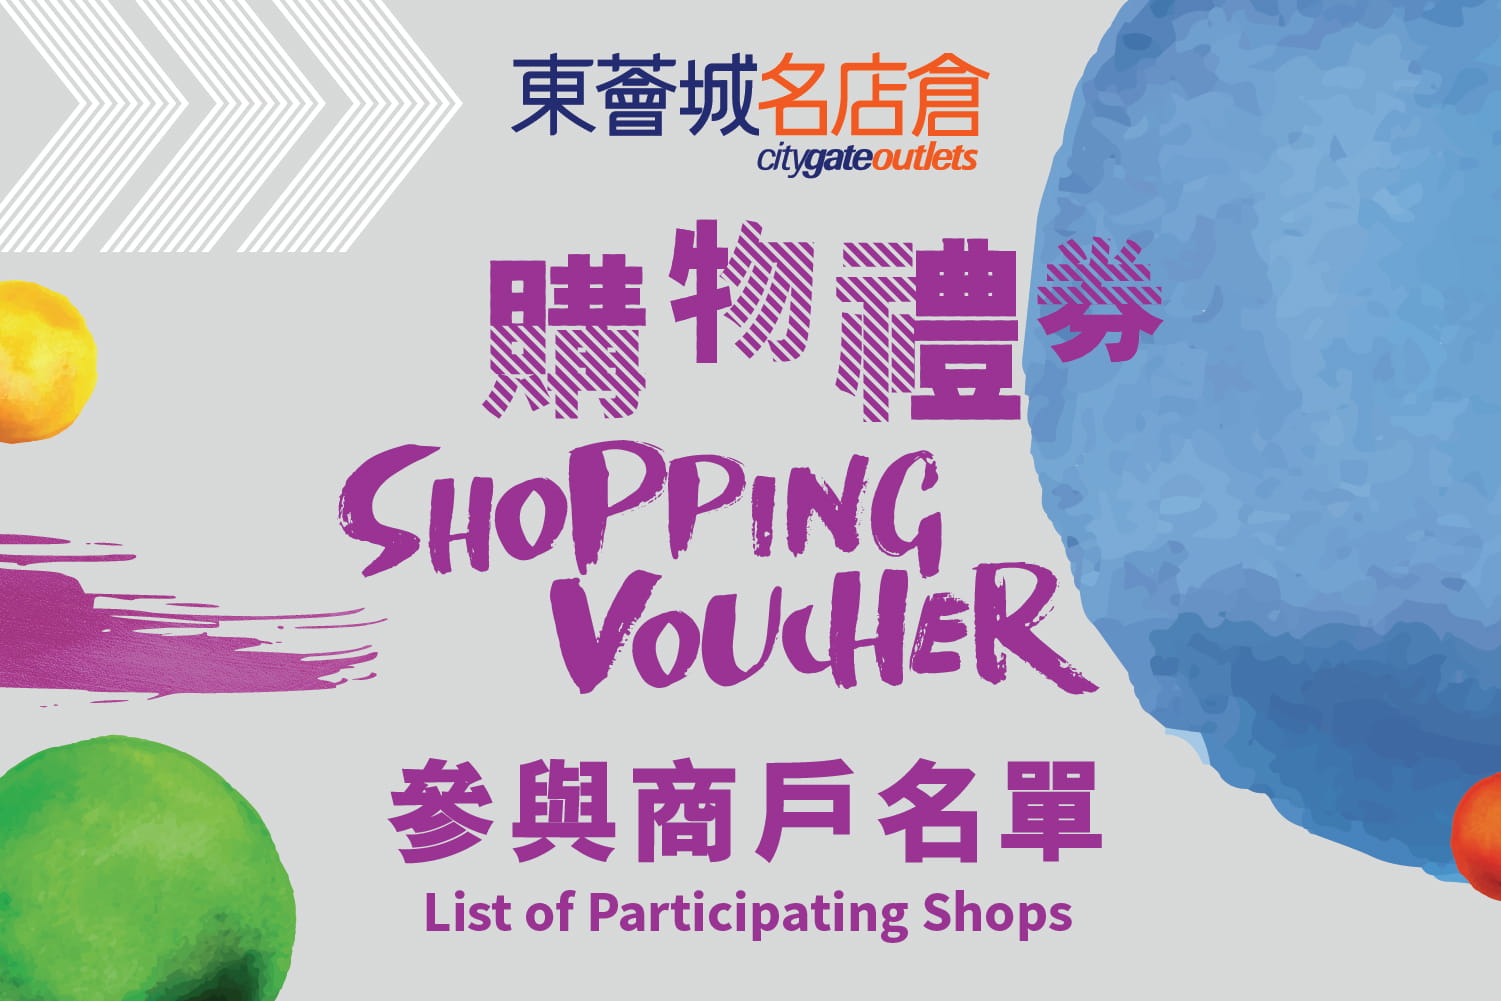 Citygate Outlets Shopping Voucher – List of Participating Shops